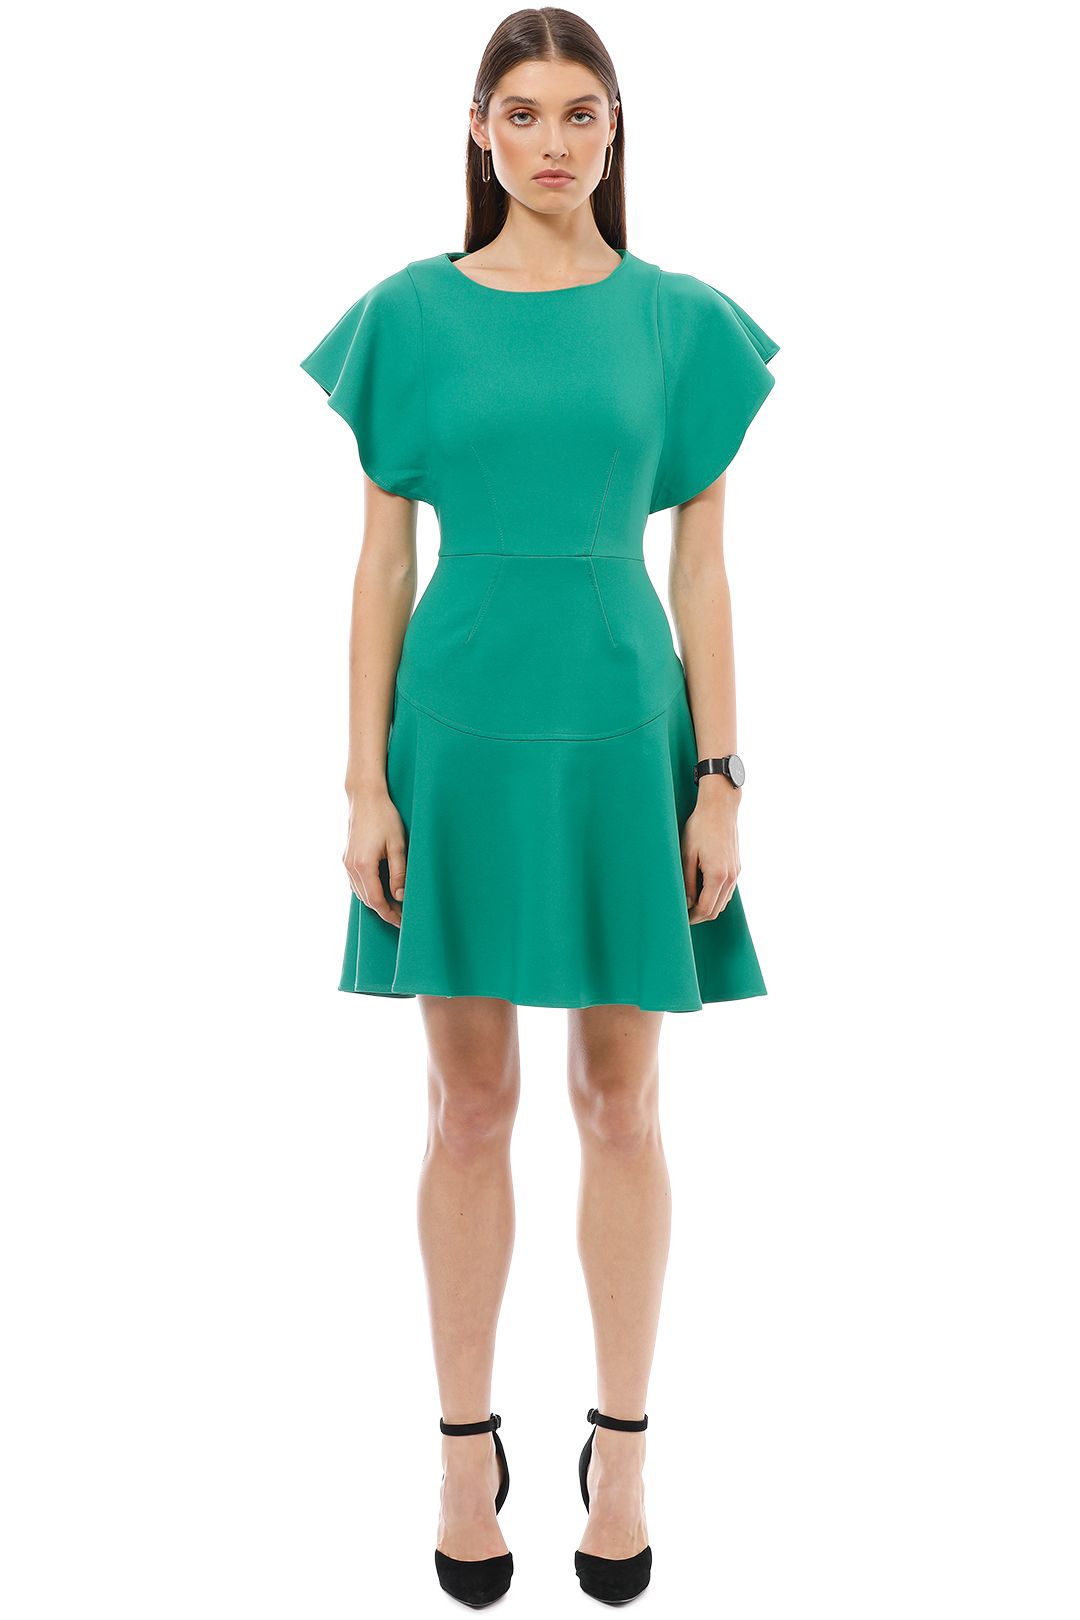 Closet London - Frill Sleeve Flared Dress - Green - Front